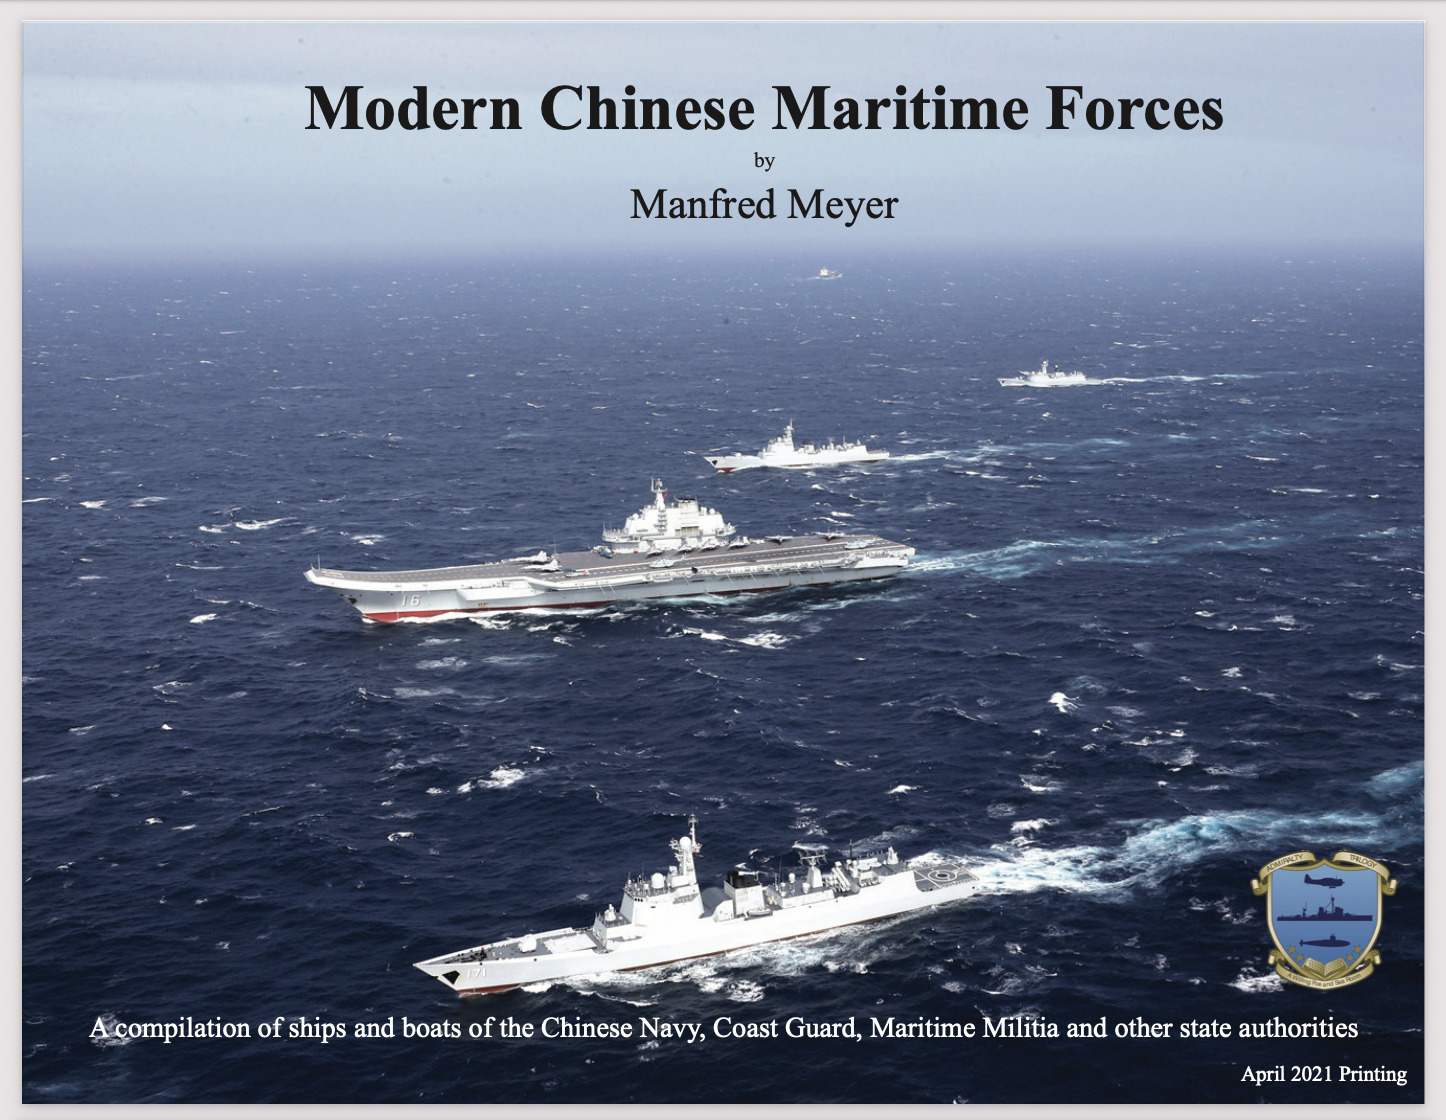 The China Maritime Militia Bookshelf: Latest Data/Analysis, SECNAV